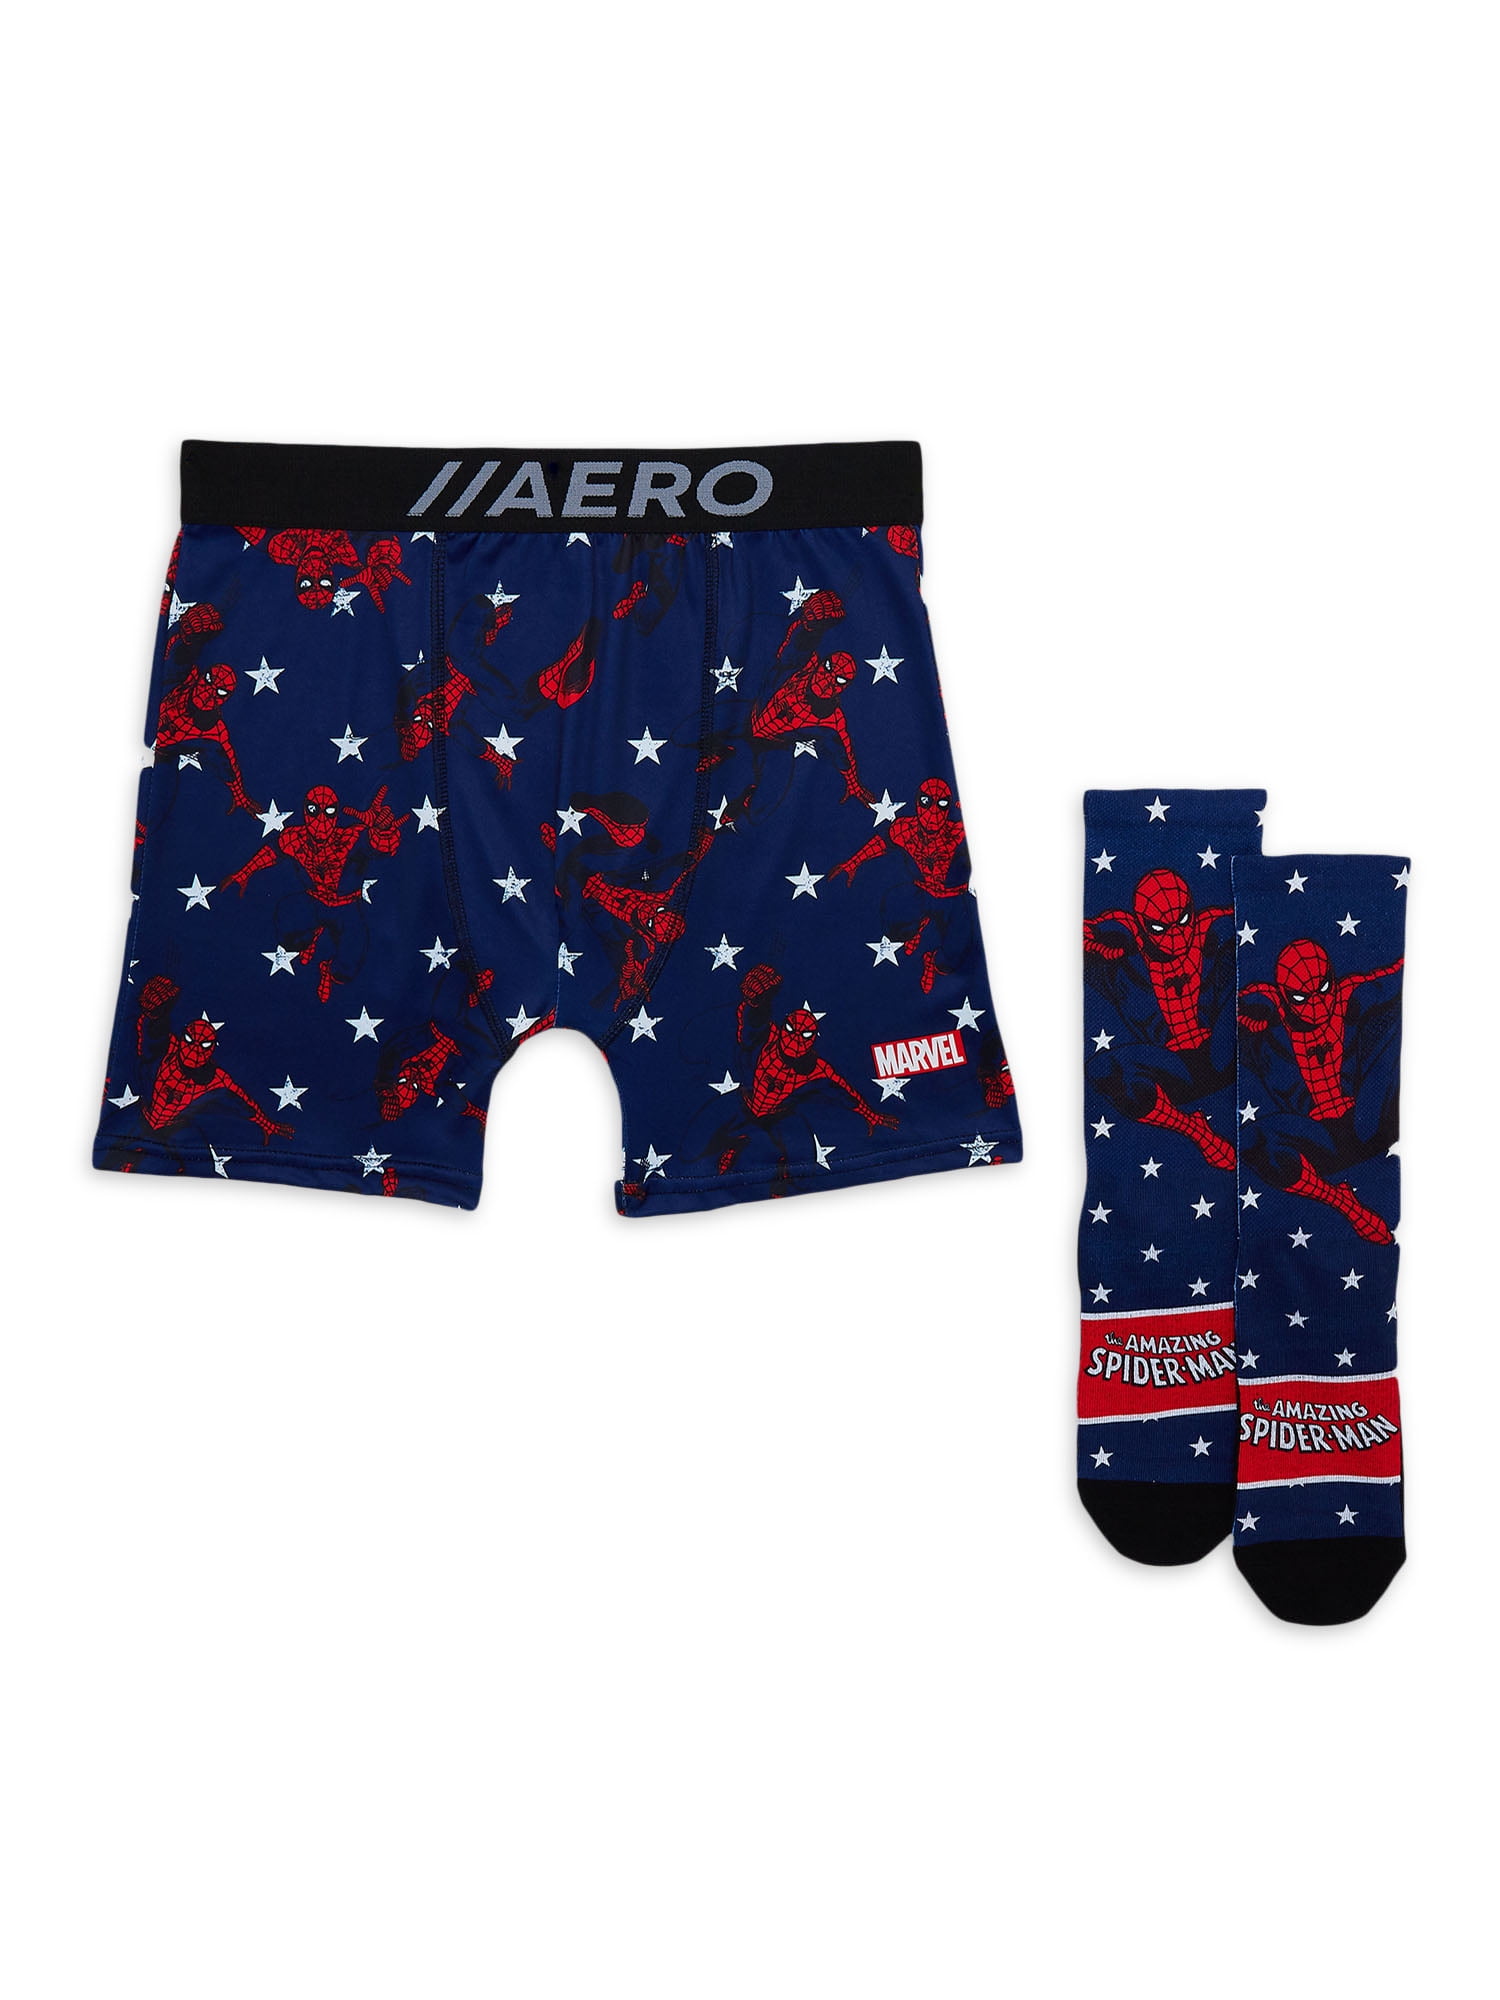 Buy Spider-Man Swinging Aero Boxer Briefs Underwear and Sock Set